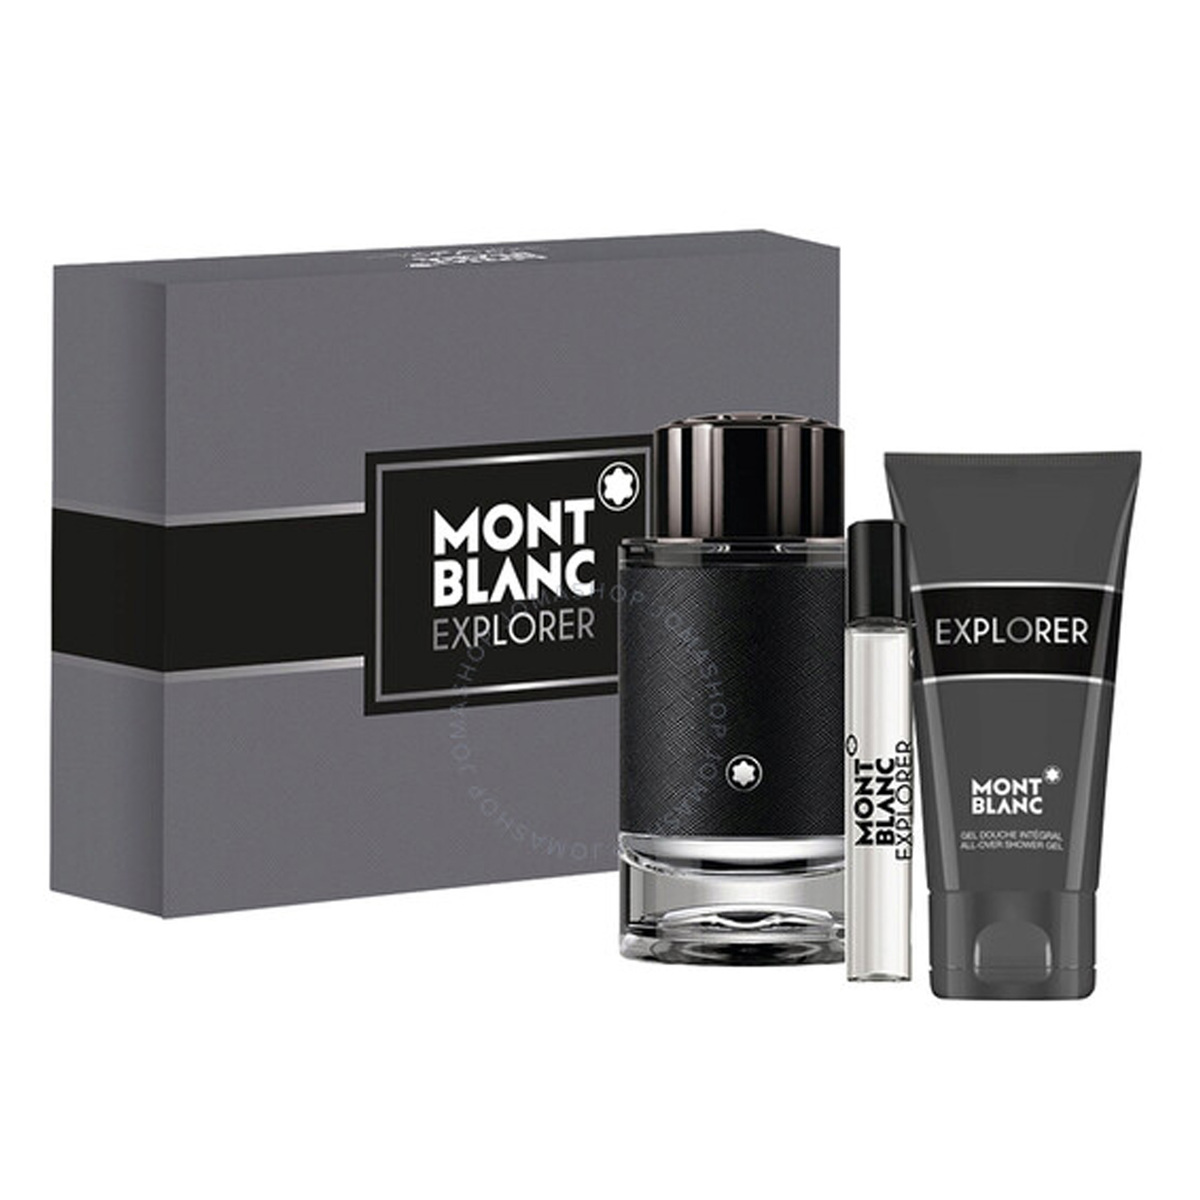 Mont Blanc Explorer Eau de Parfum For Men, 100 ml + 7.5 ml Travel Spray + 100 ml Shower Gel Travel Set